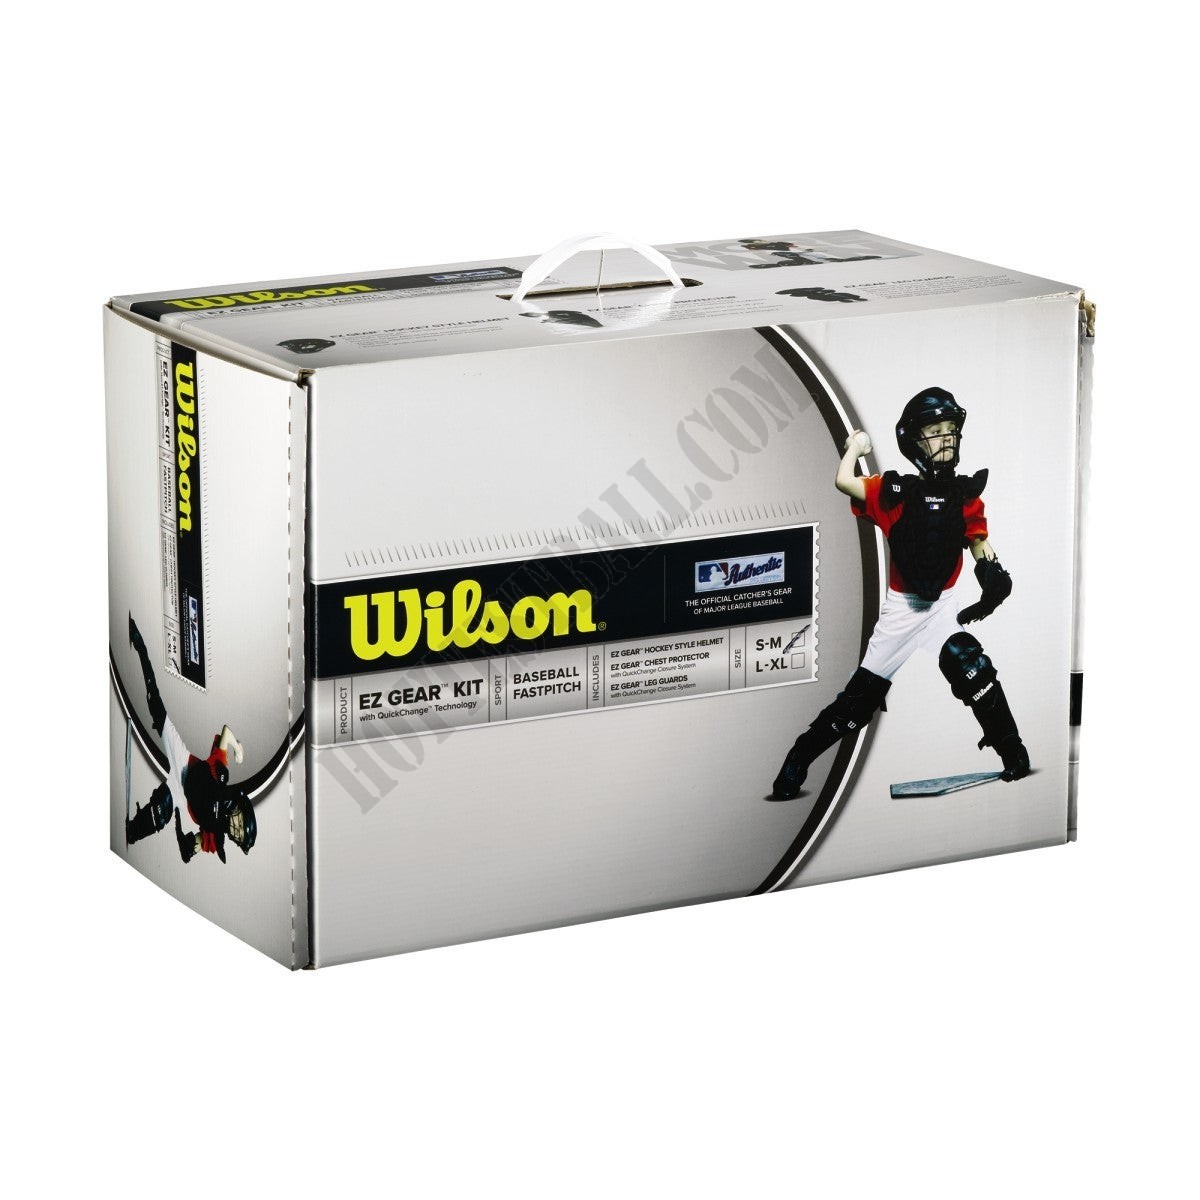 EZ Gear Catcher's Kit - Baltimore Orioles - Wilson Discount Store - -5